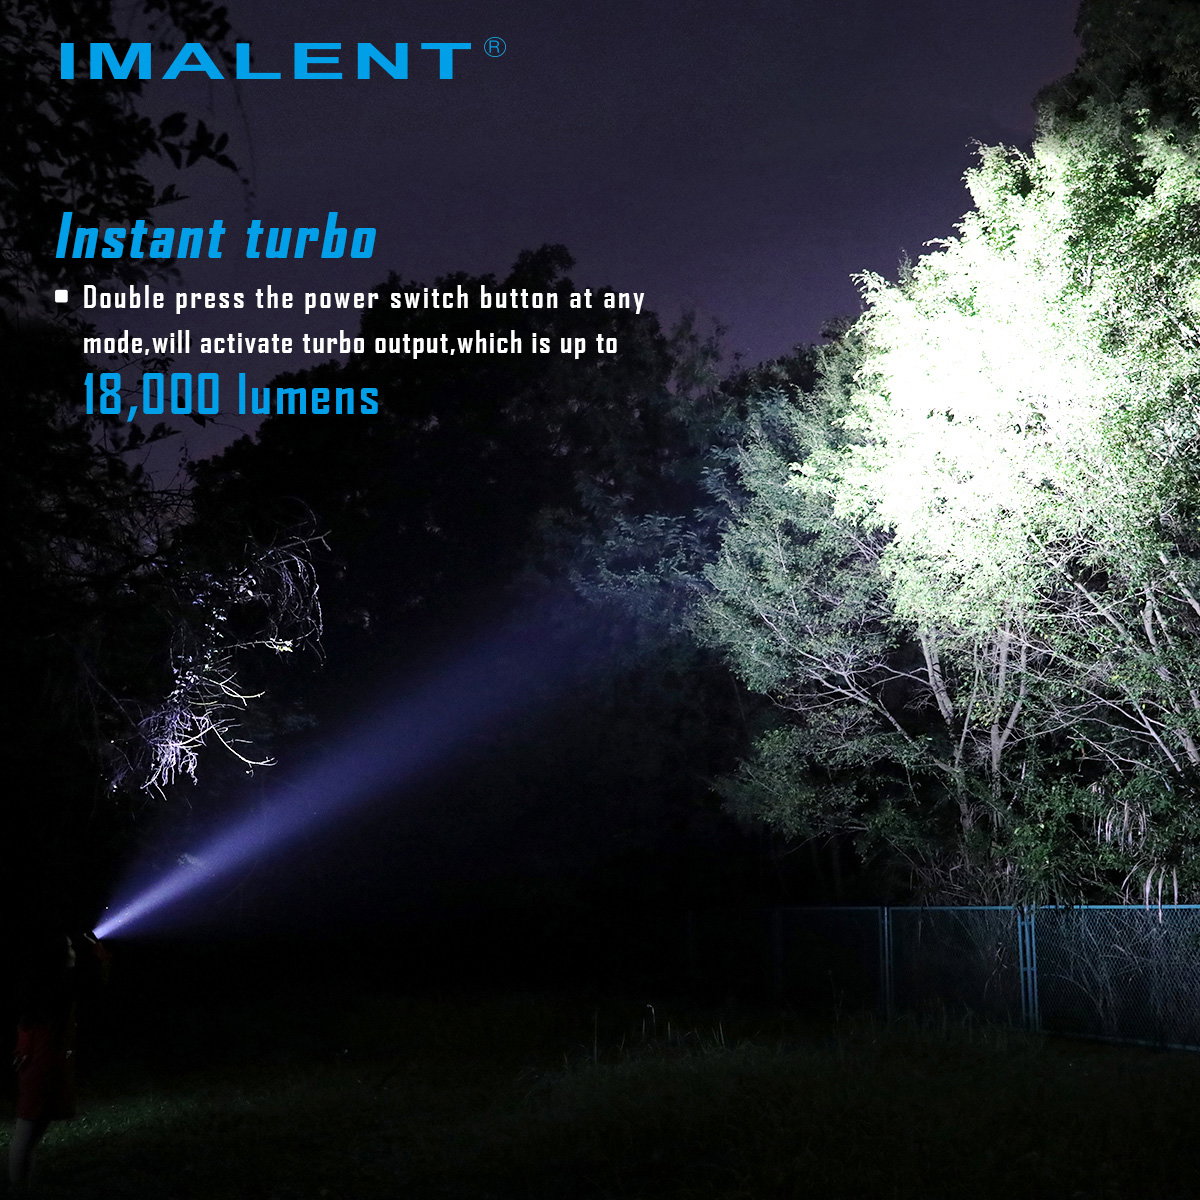 Imalent SR32 Flashlight Kit Review! (Brightest Flashlight In The